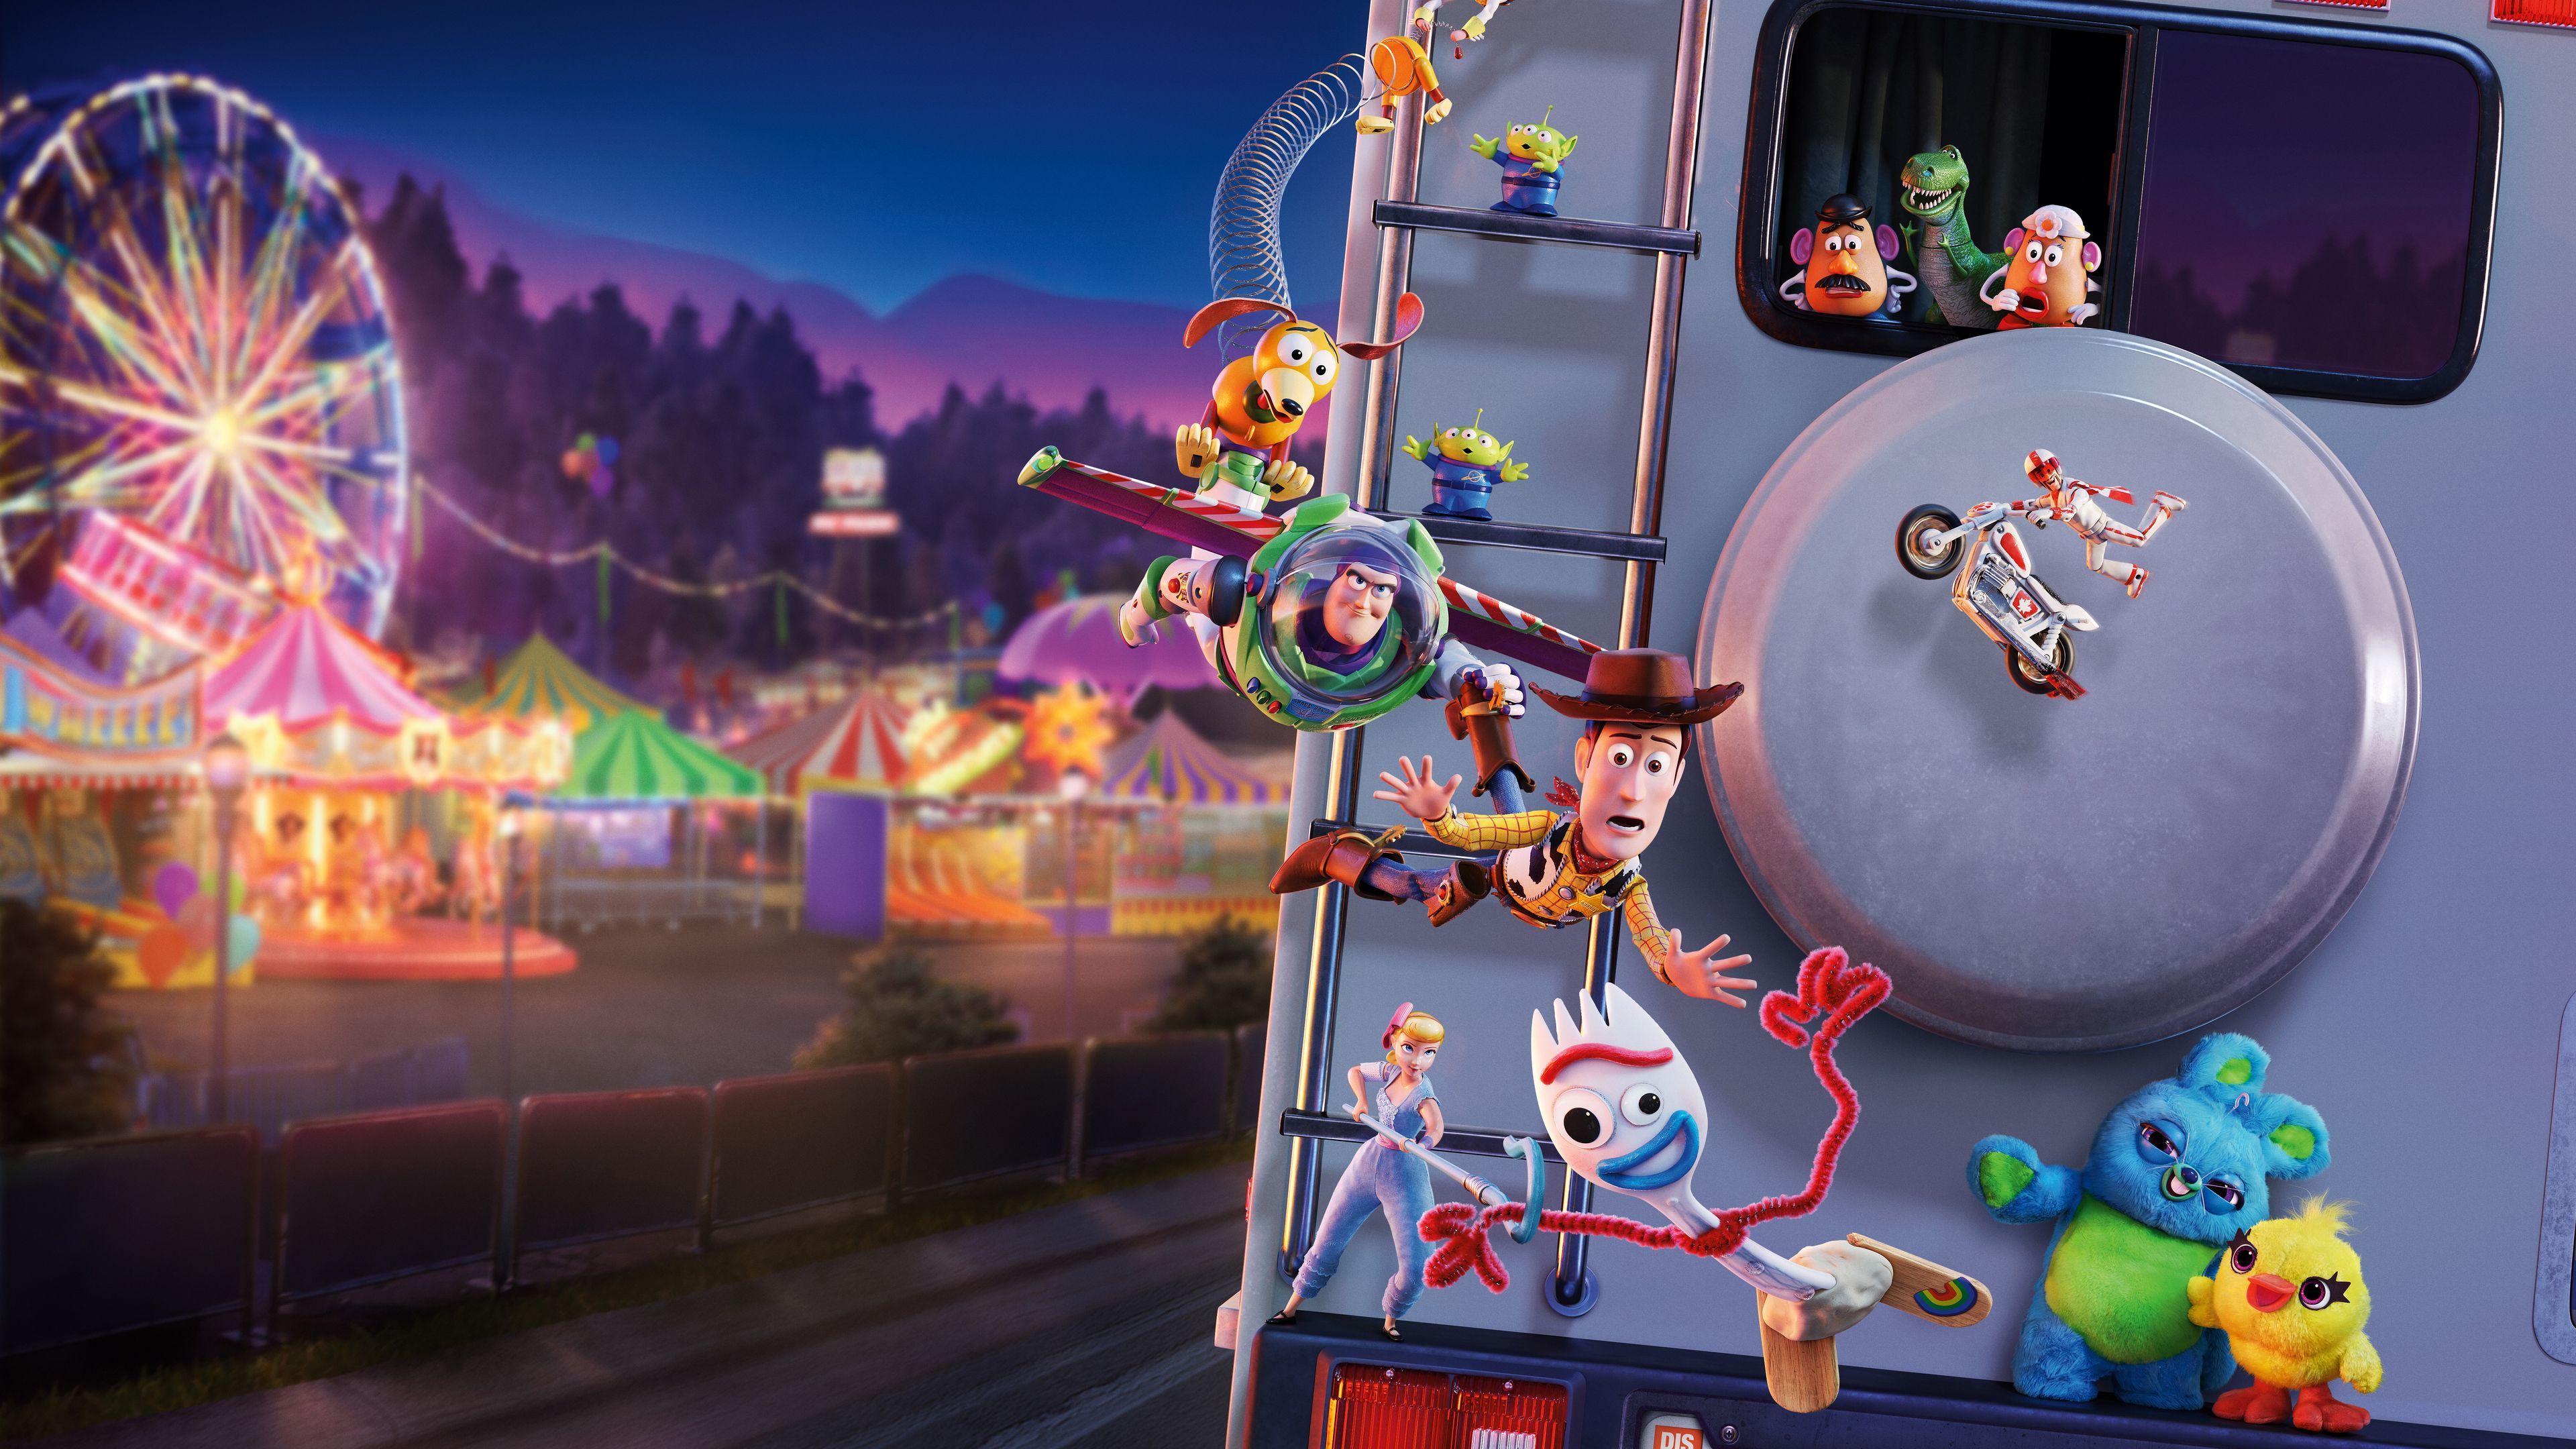 Wallpaper 4k Toy Story 4 4k 2019 Movies Wallpaper, 4k Wallpaper